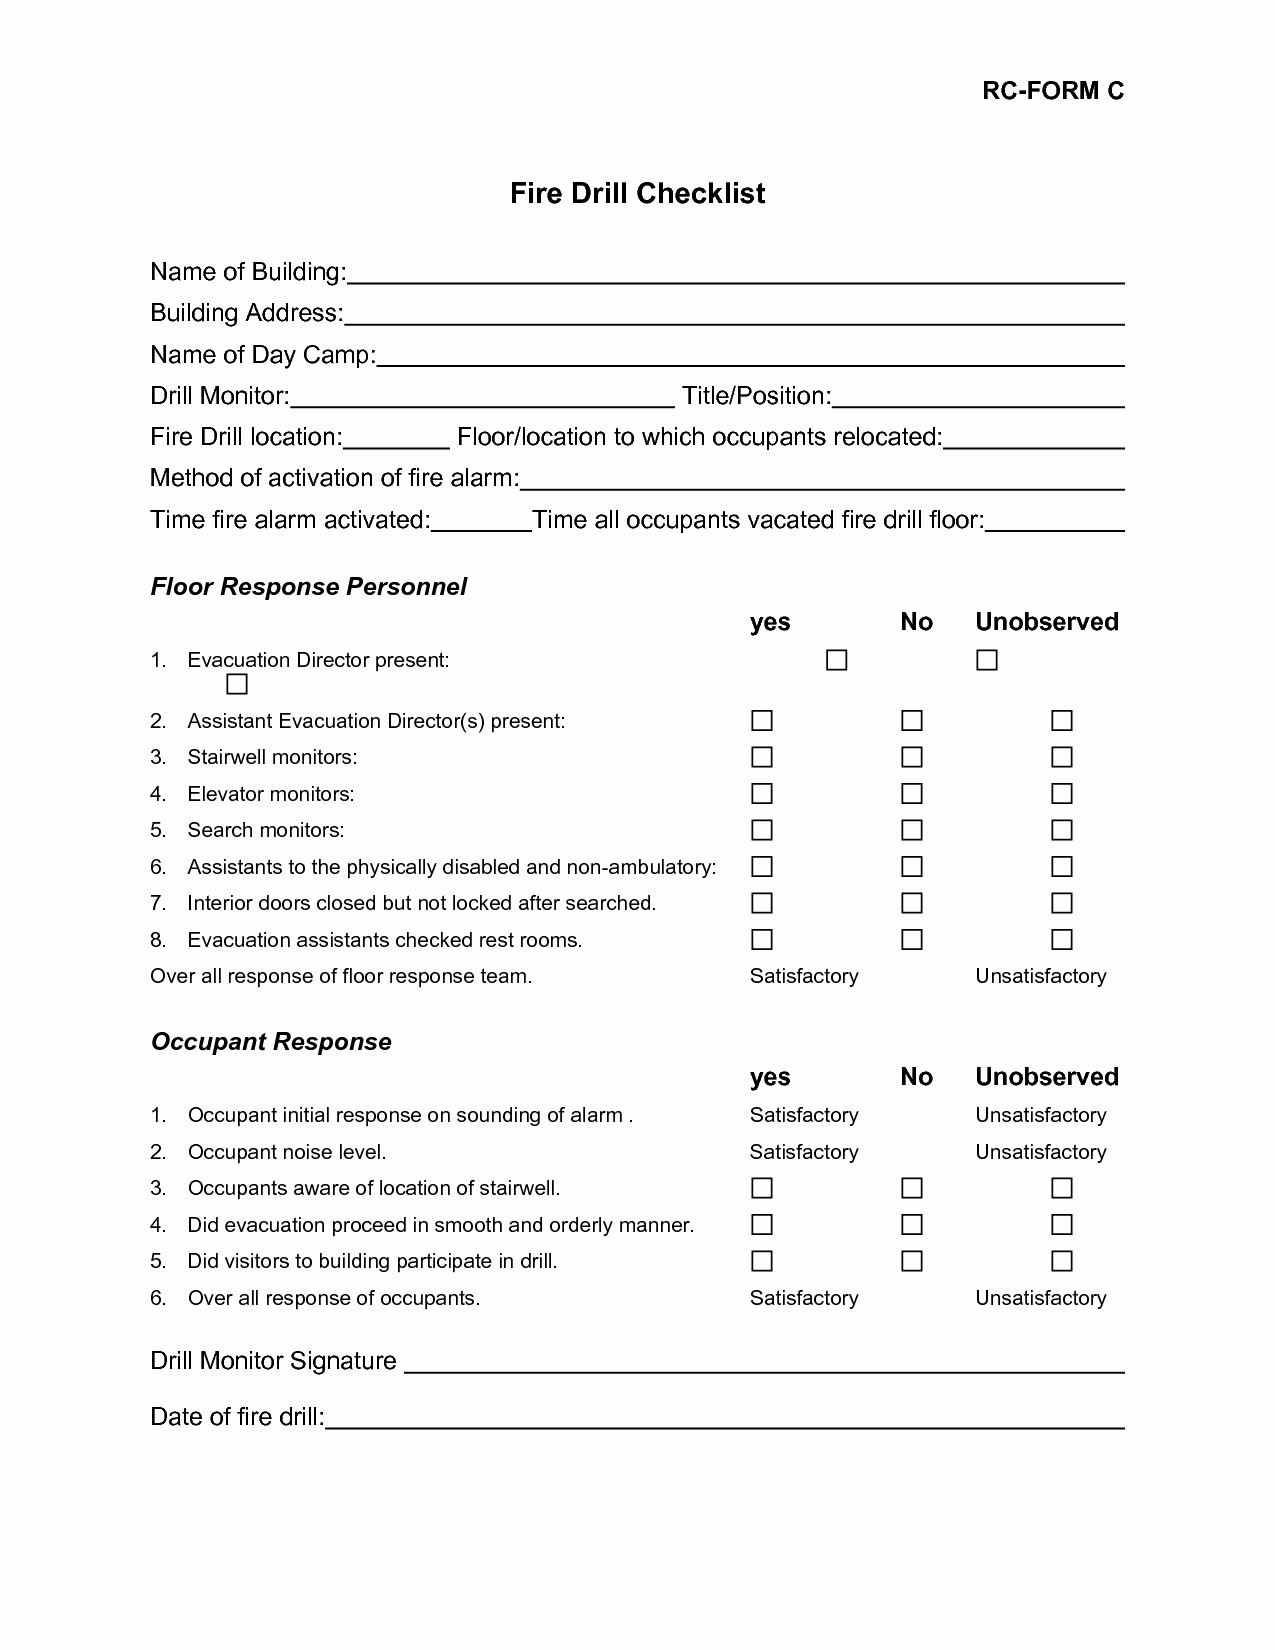 Fire Drill Checklist Template New Document